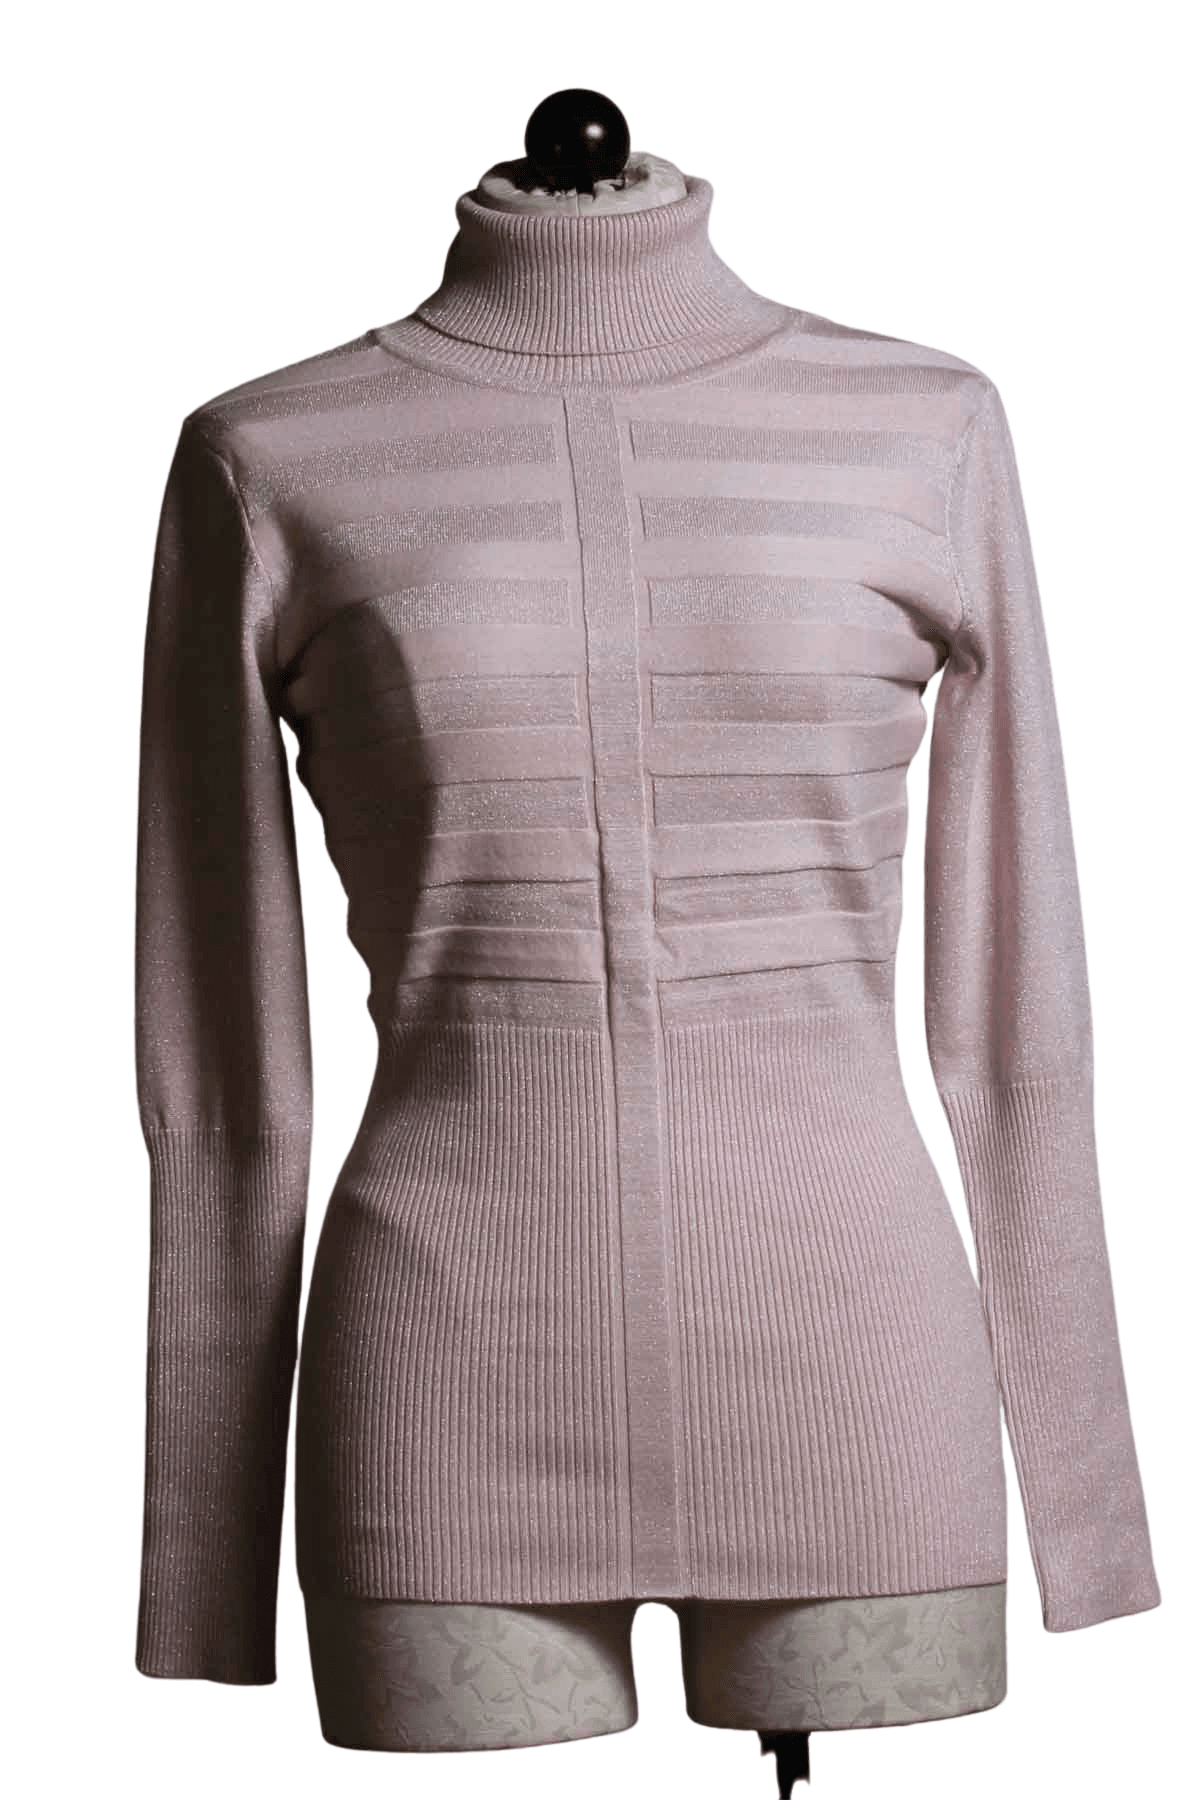 blush Metallic Knit Turtleneck by Frank Lyman with a geometric woven texture